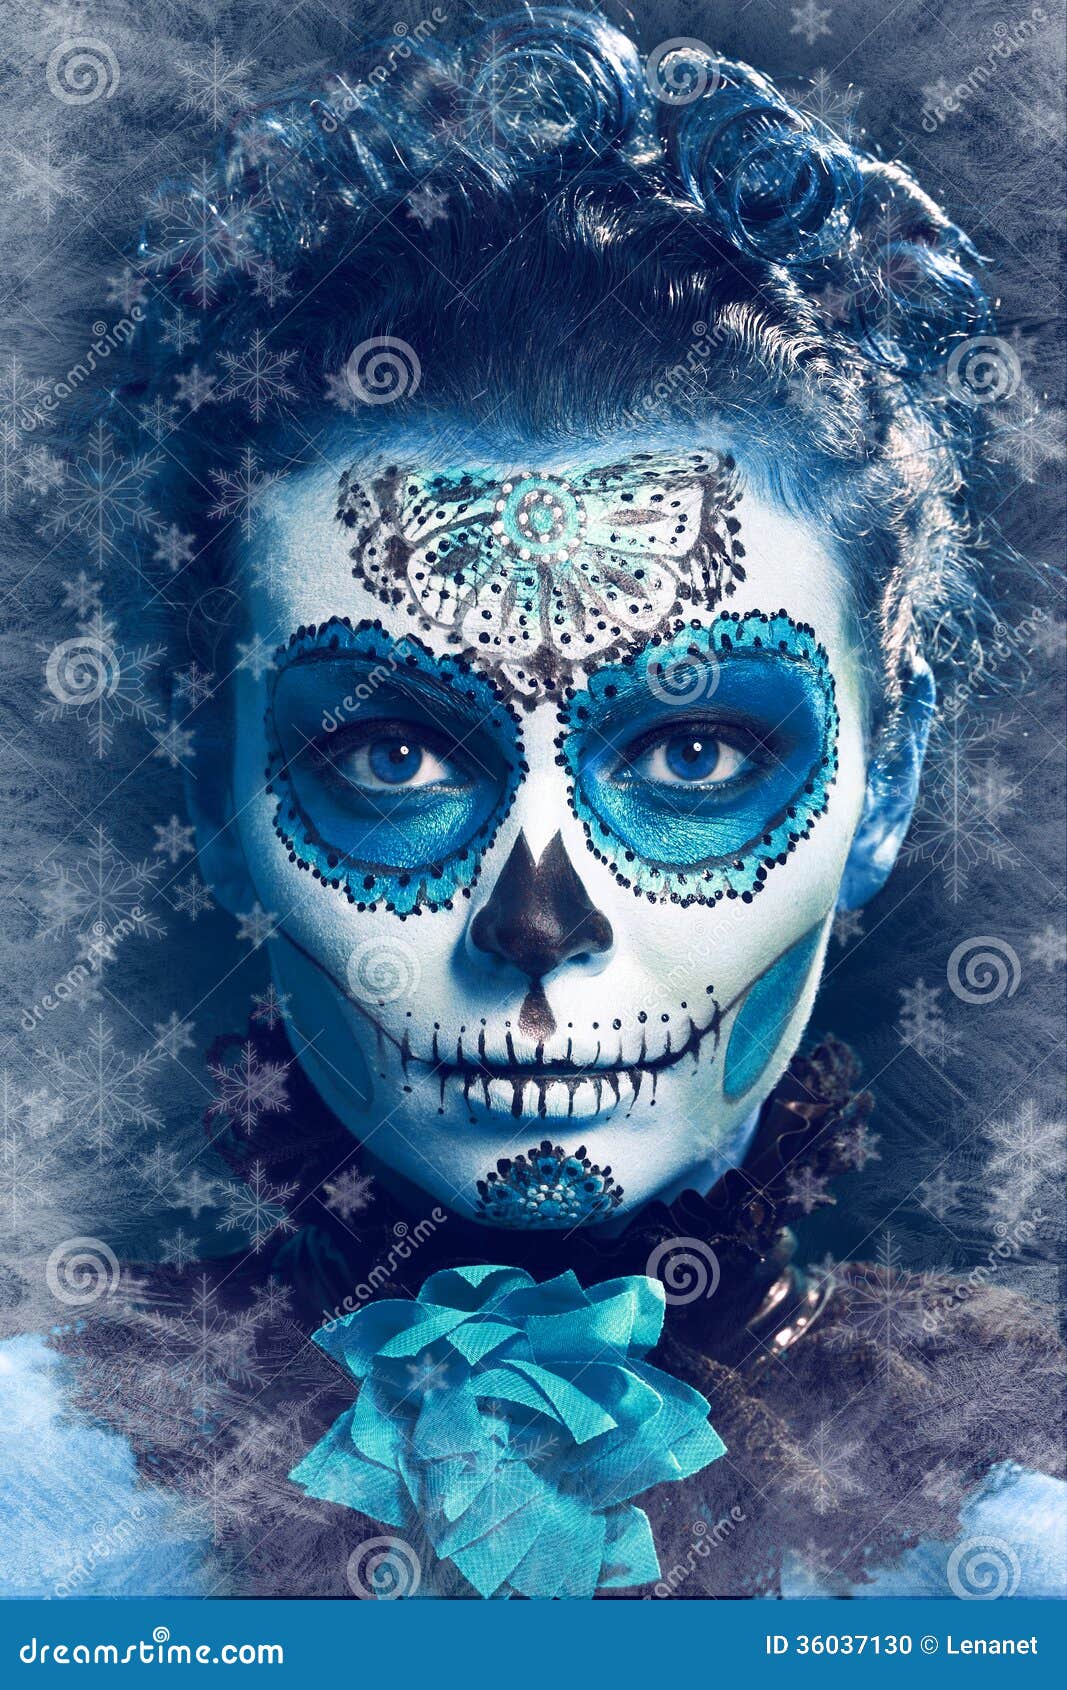 Winter Make Up Sugar Skull Stock Photo - Image: 36037130